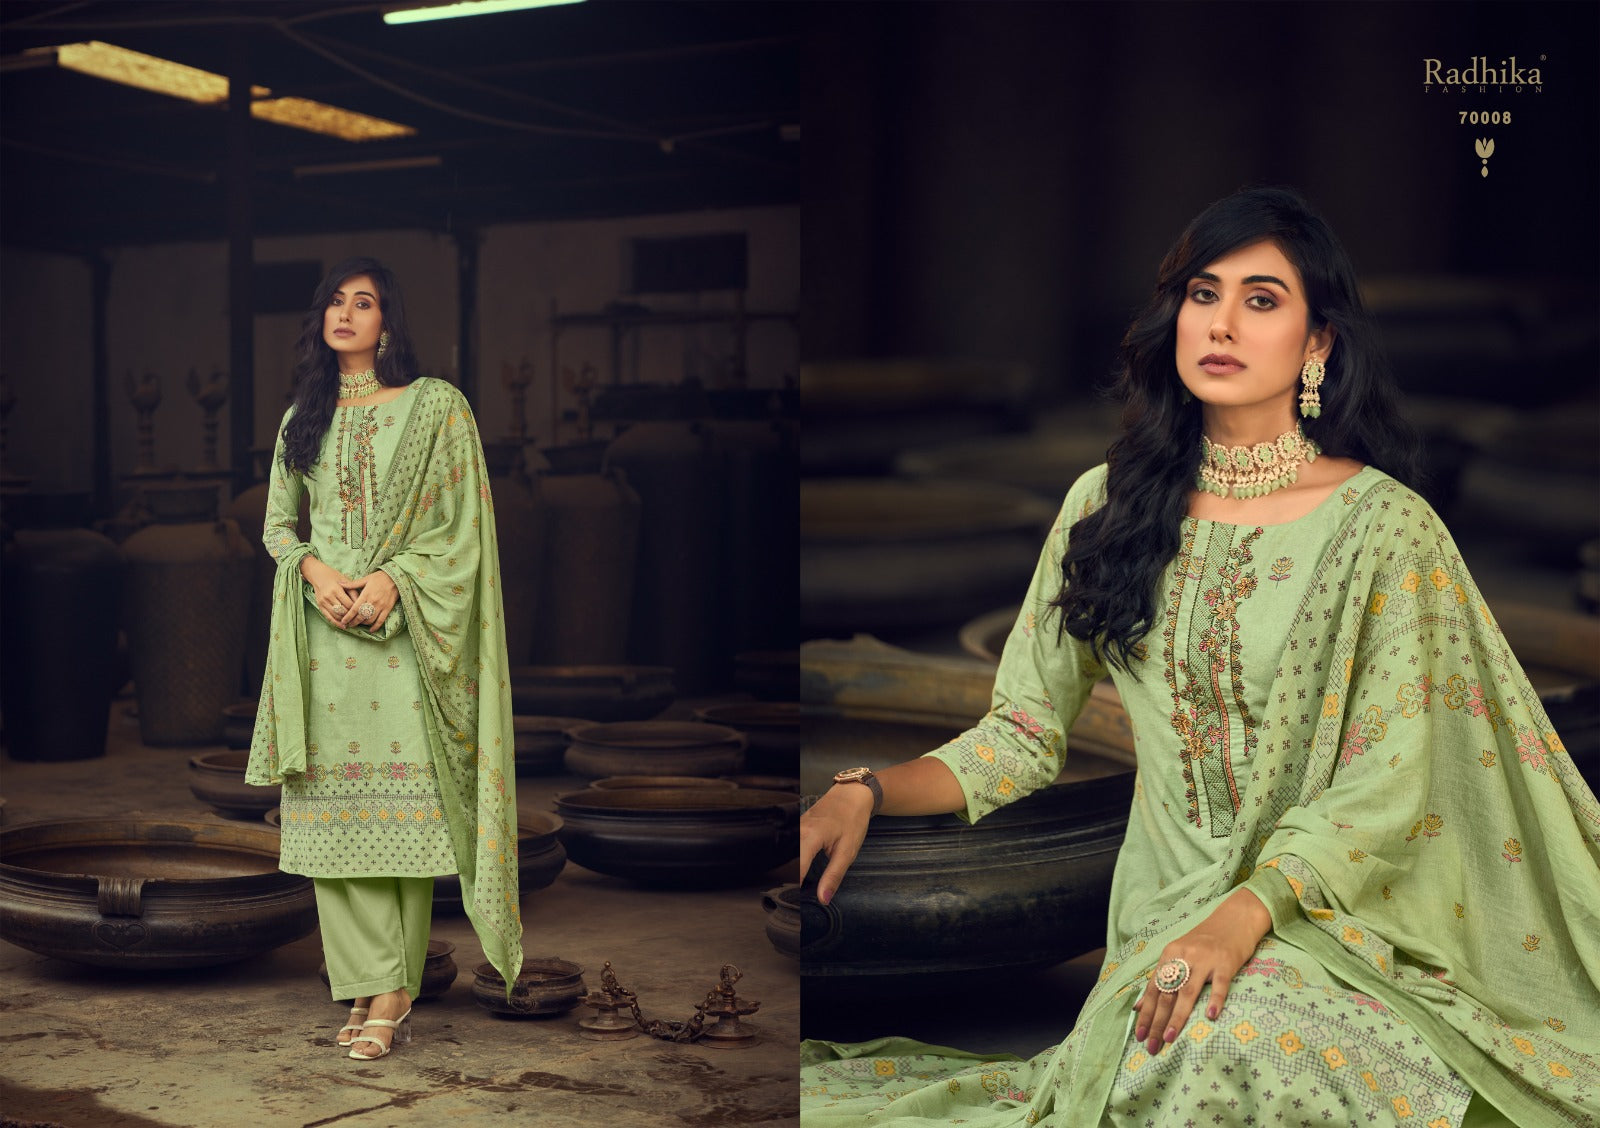 Radhika Azara Karachi Suit Mussaret Vol 24 Zam Cotton With Embroidery Work Salwar Suit Ladies Suit Design